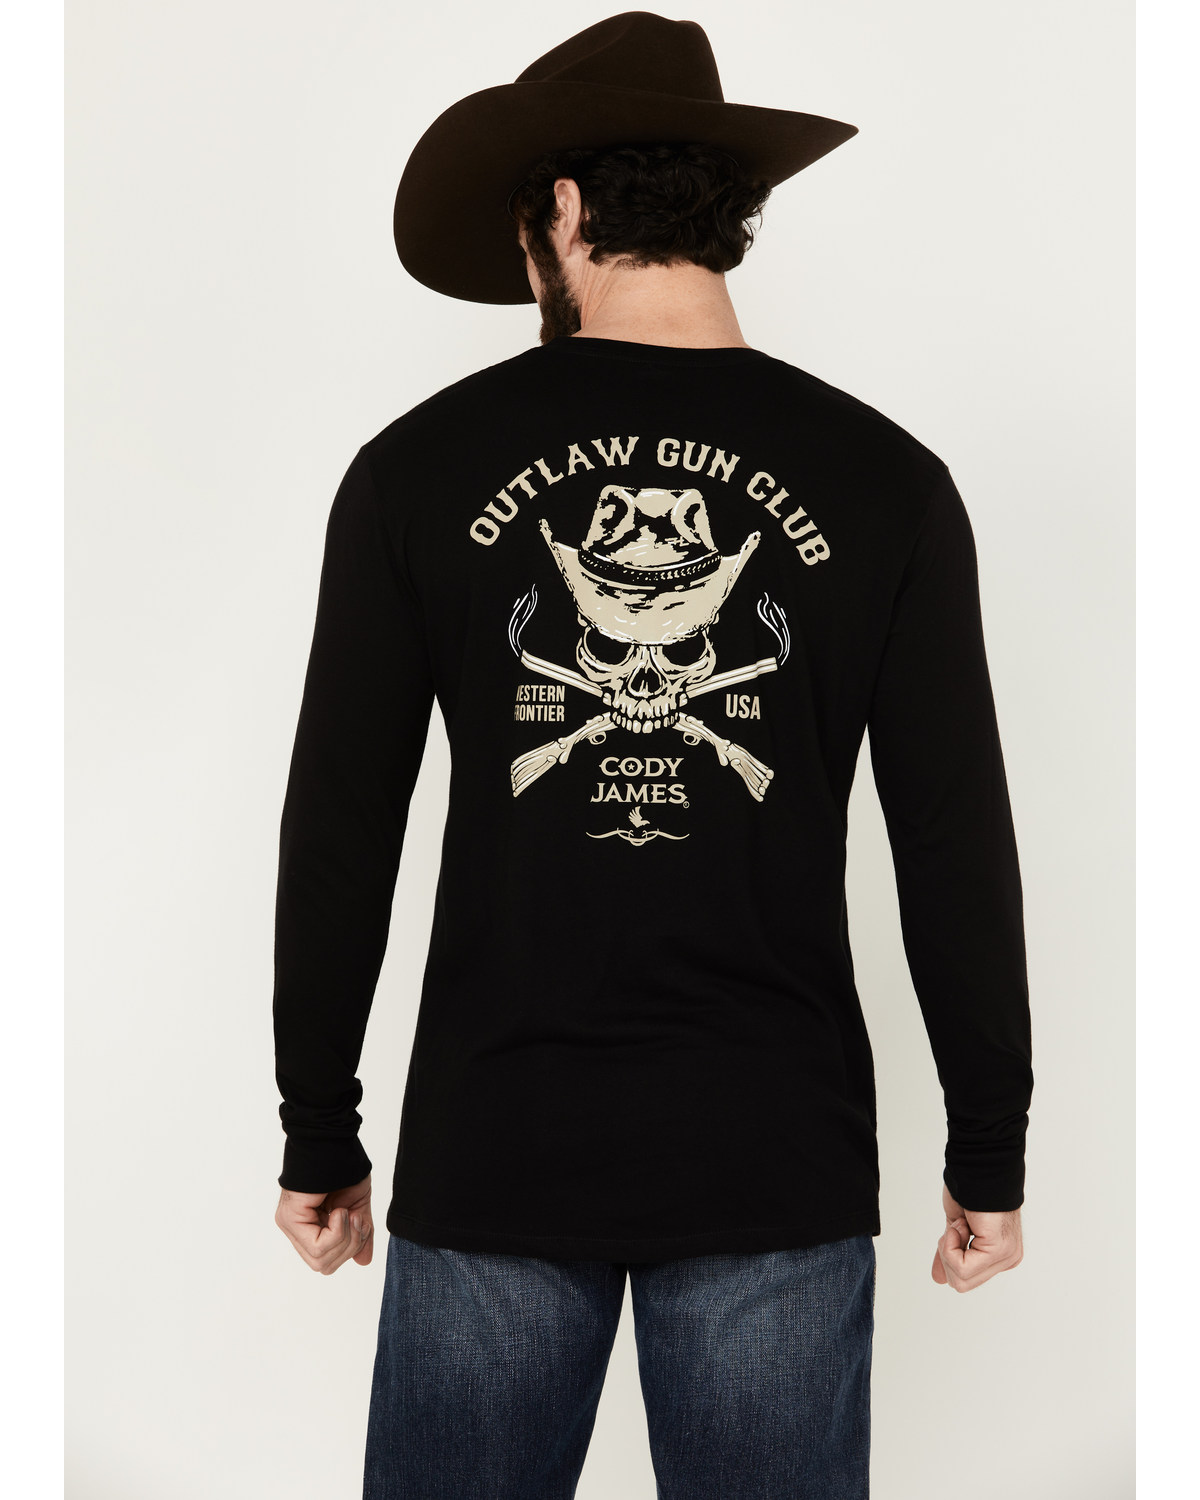 Cody James Men's Outlaw Gun Club Long Sleeve Graphic T-Shirt